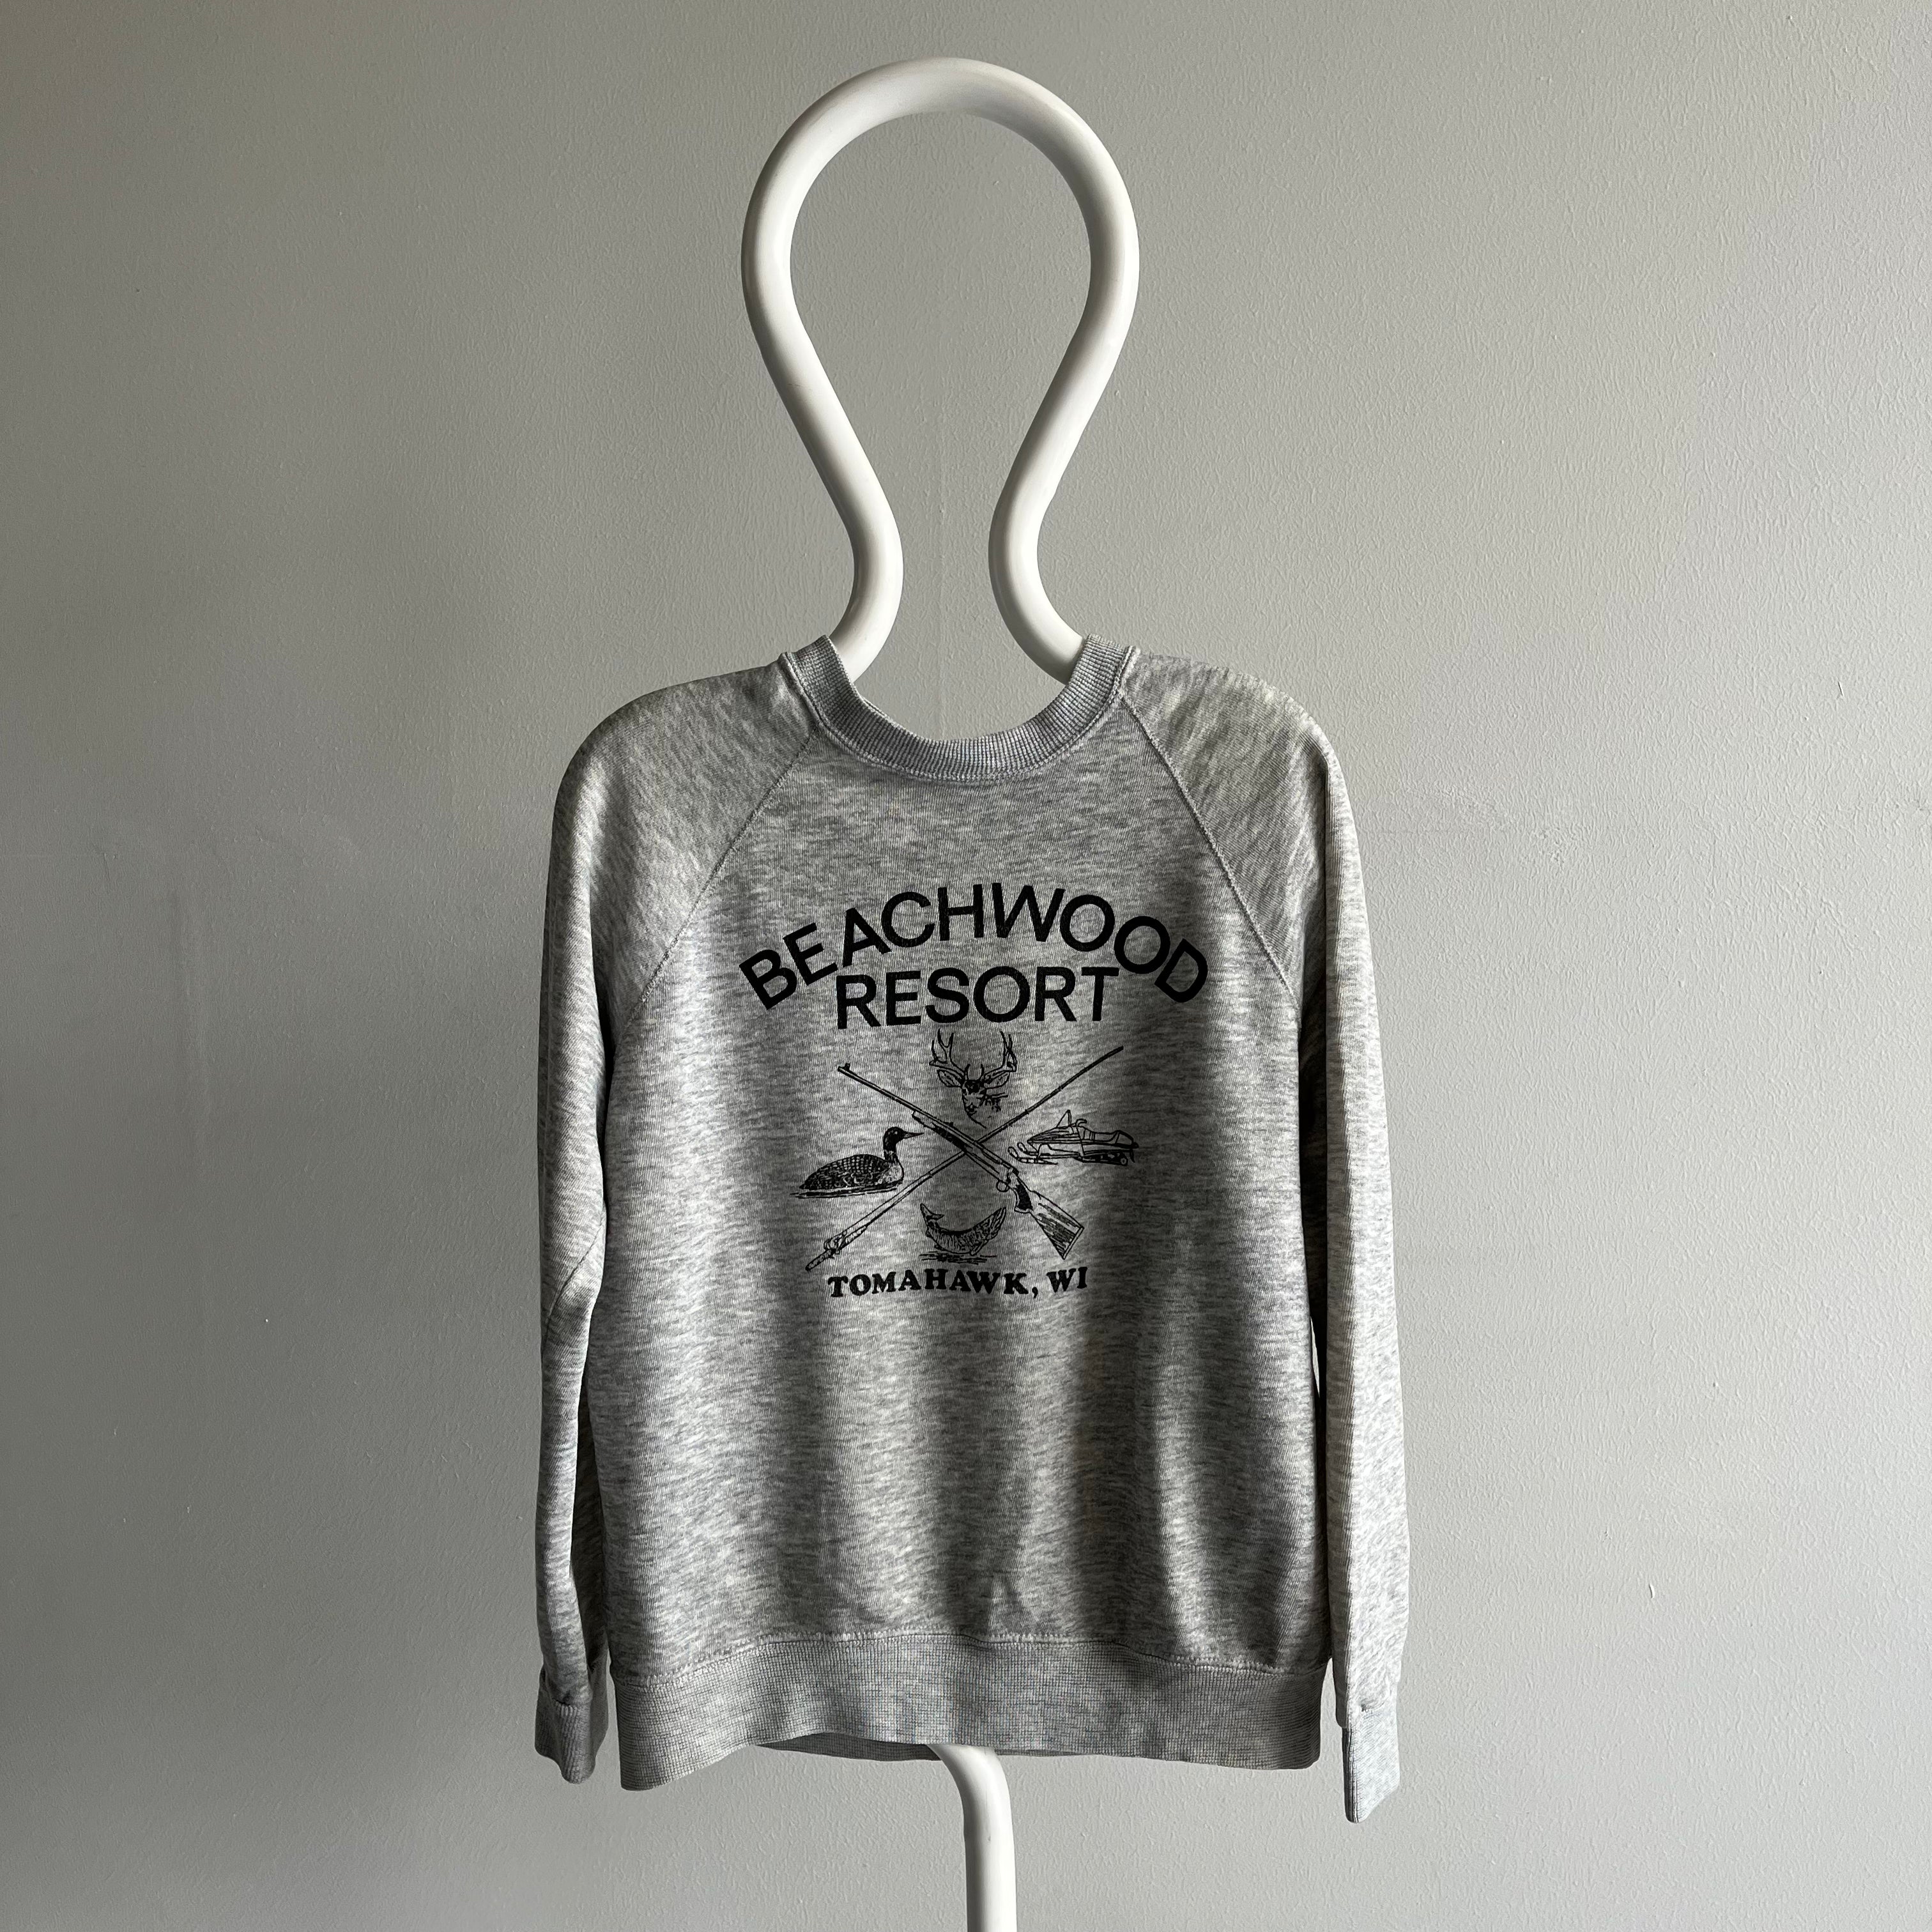 1980s Beachwood Resort - Tomahawk, Wisconsin - Sweatshirt!